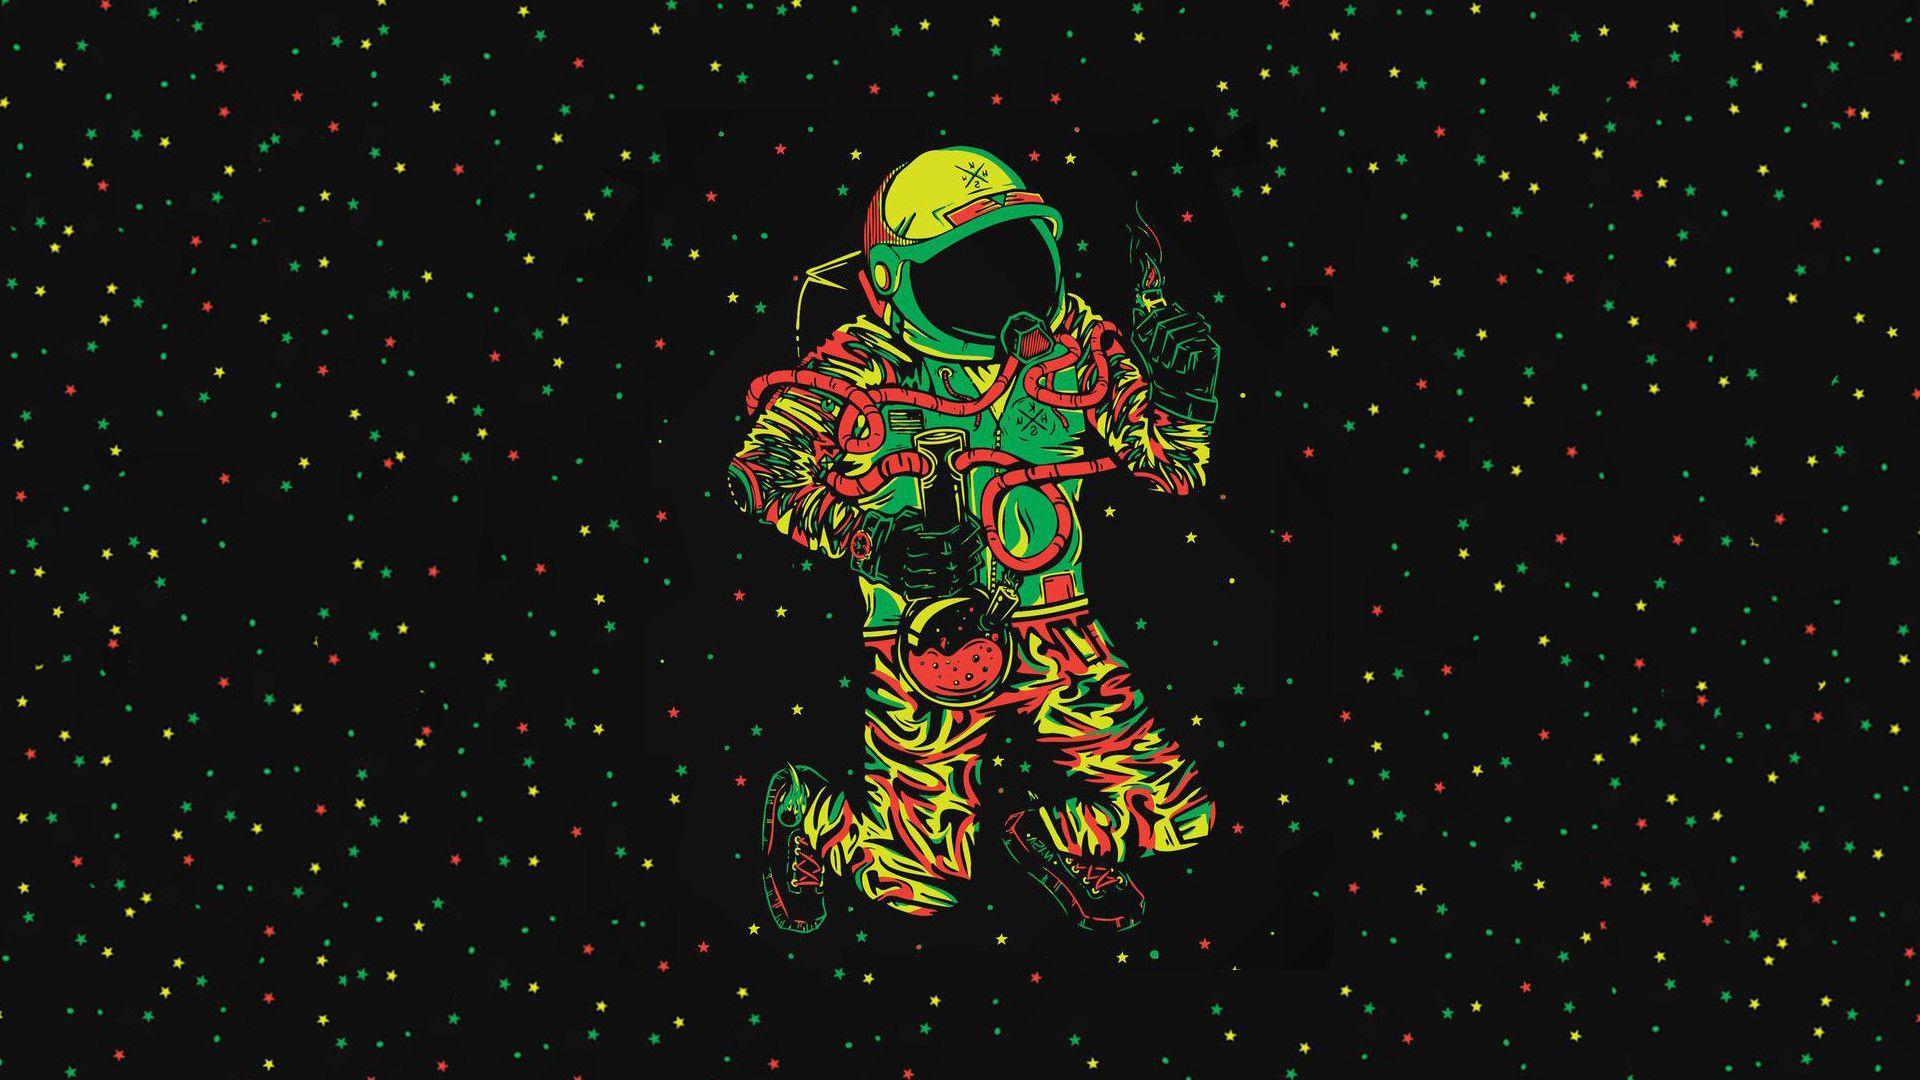 Amazing Astronaut Wallpapers - Top Free Amazing Astronaut Backgrounds